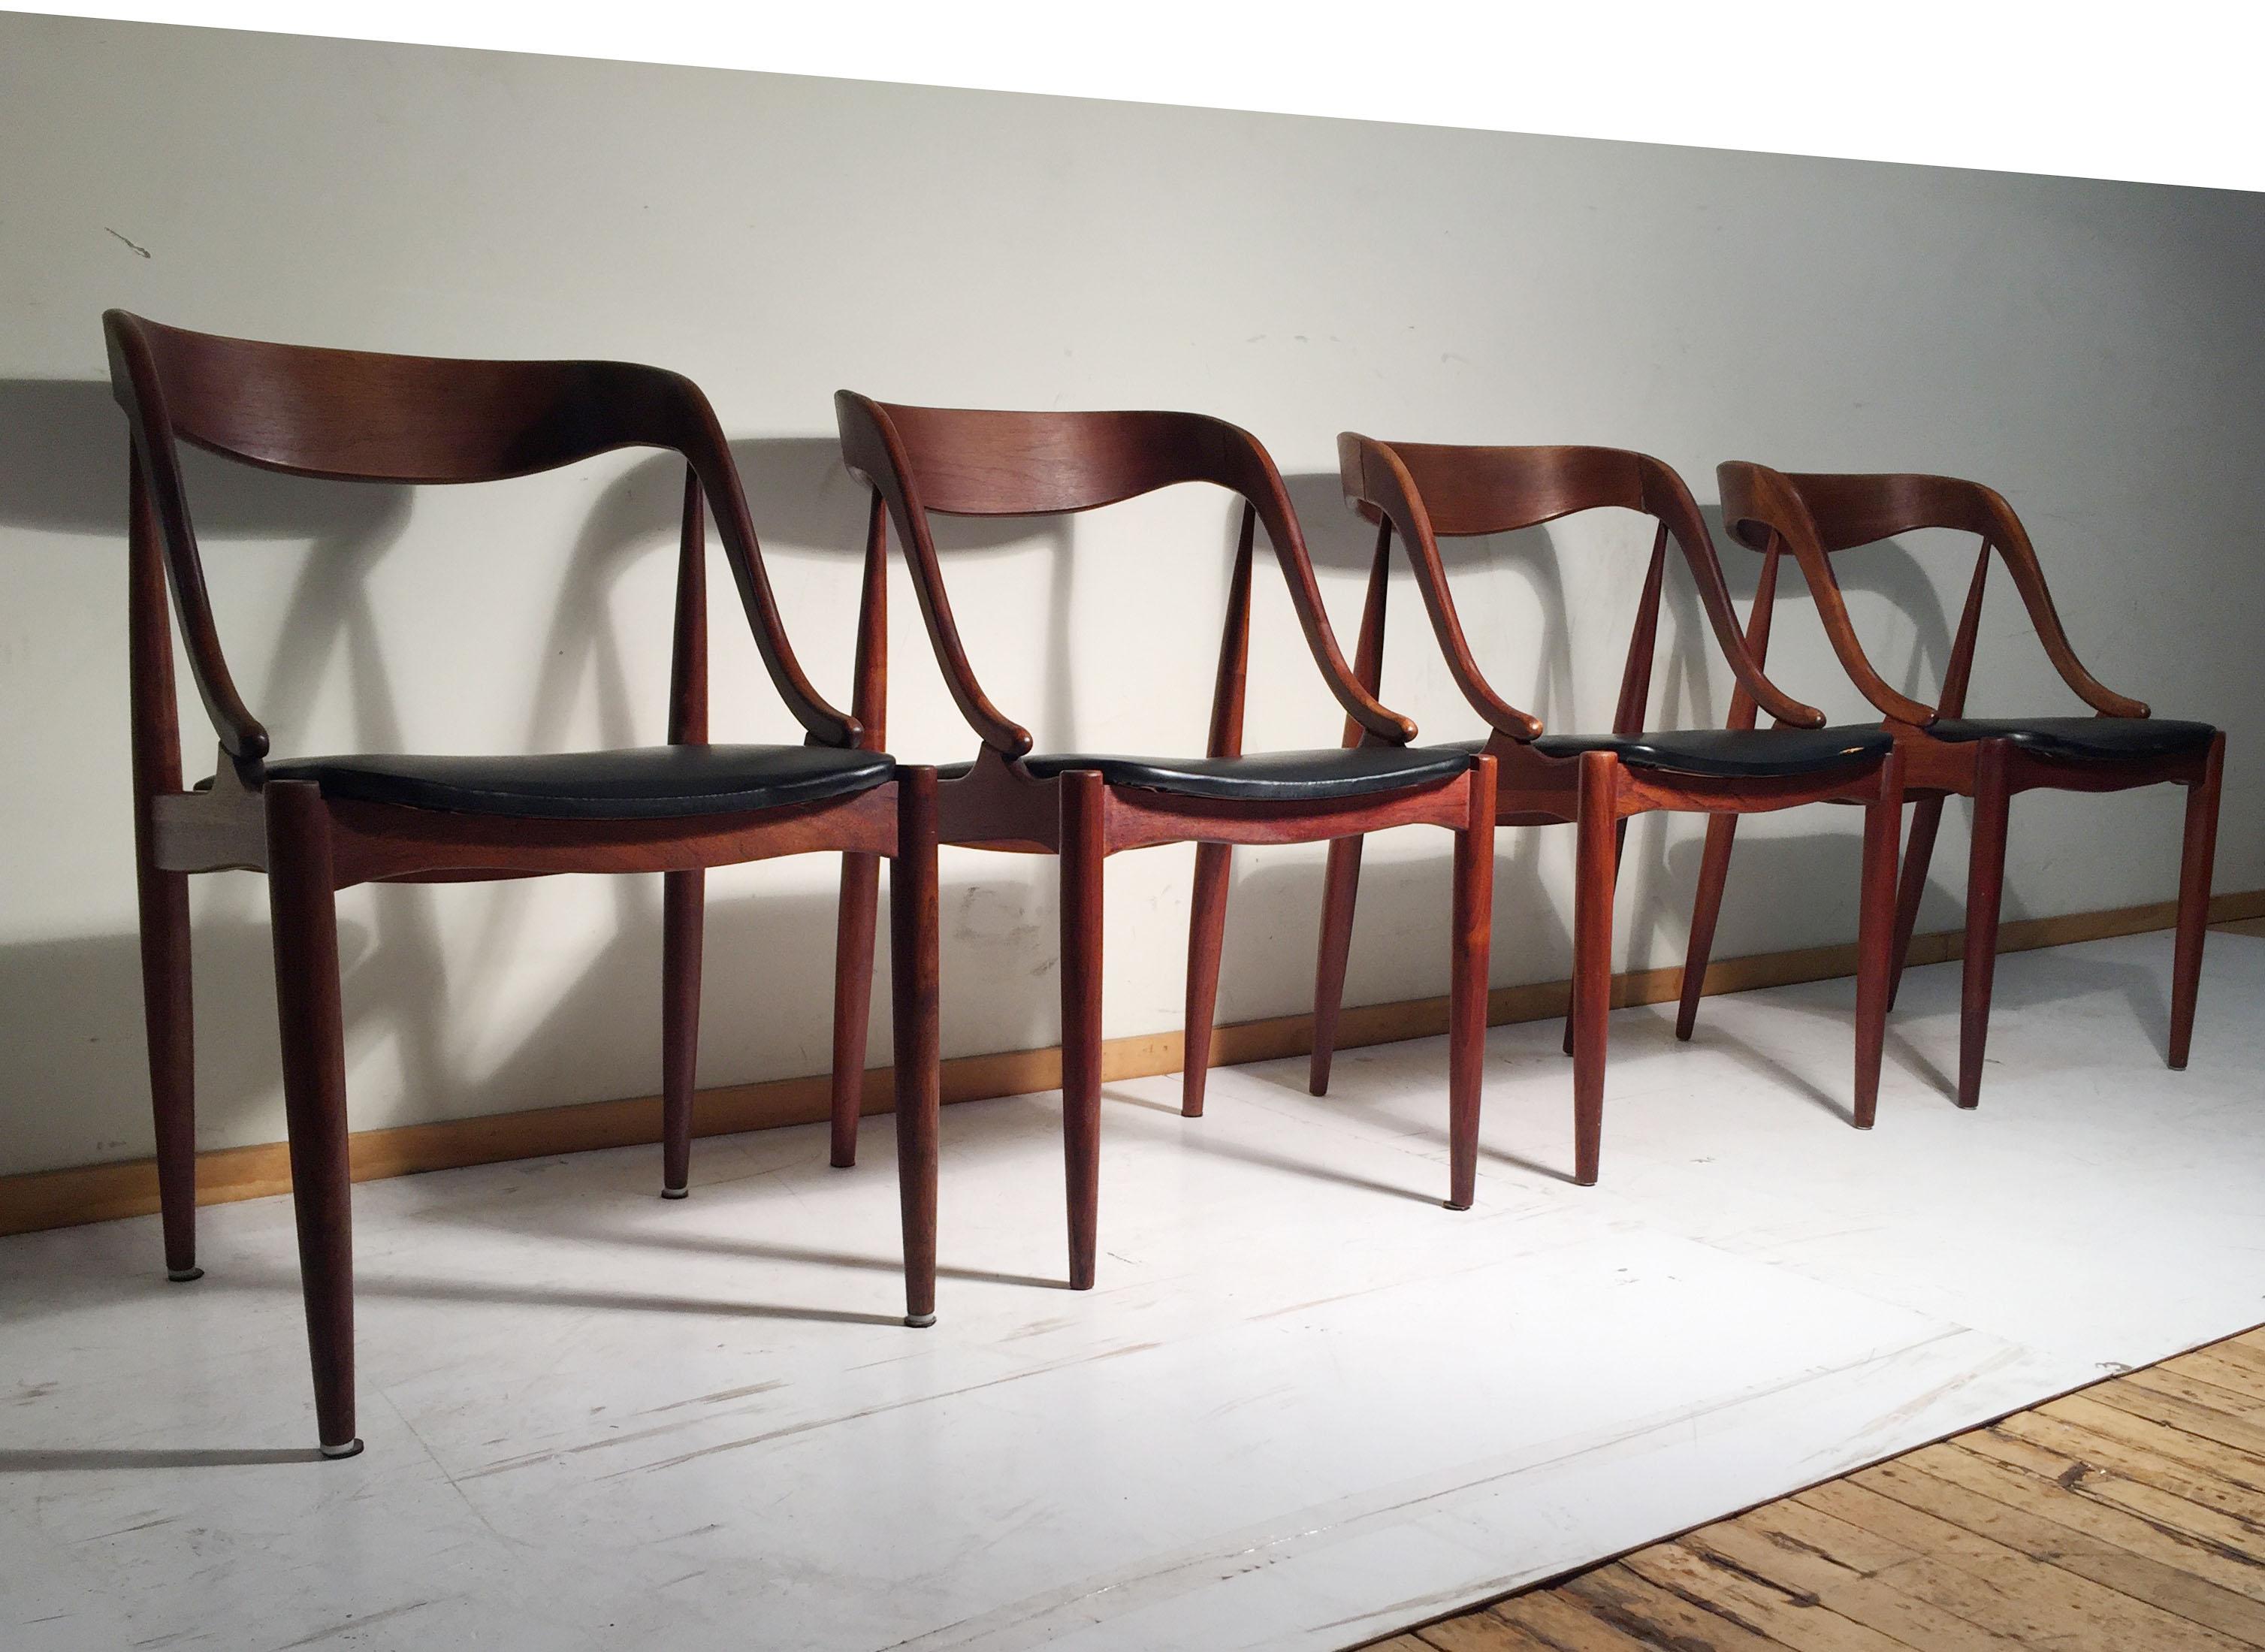 A vintage set of 4 Johannes Andersen teak dining chairs for Moreddi.